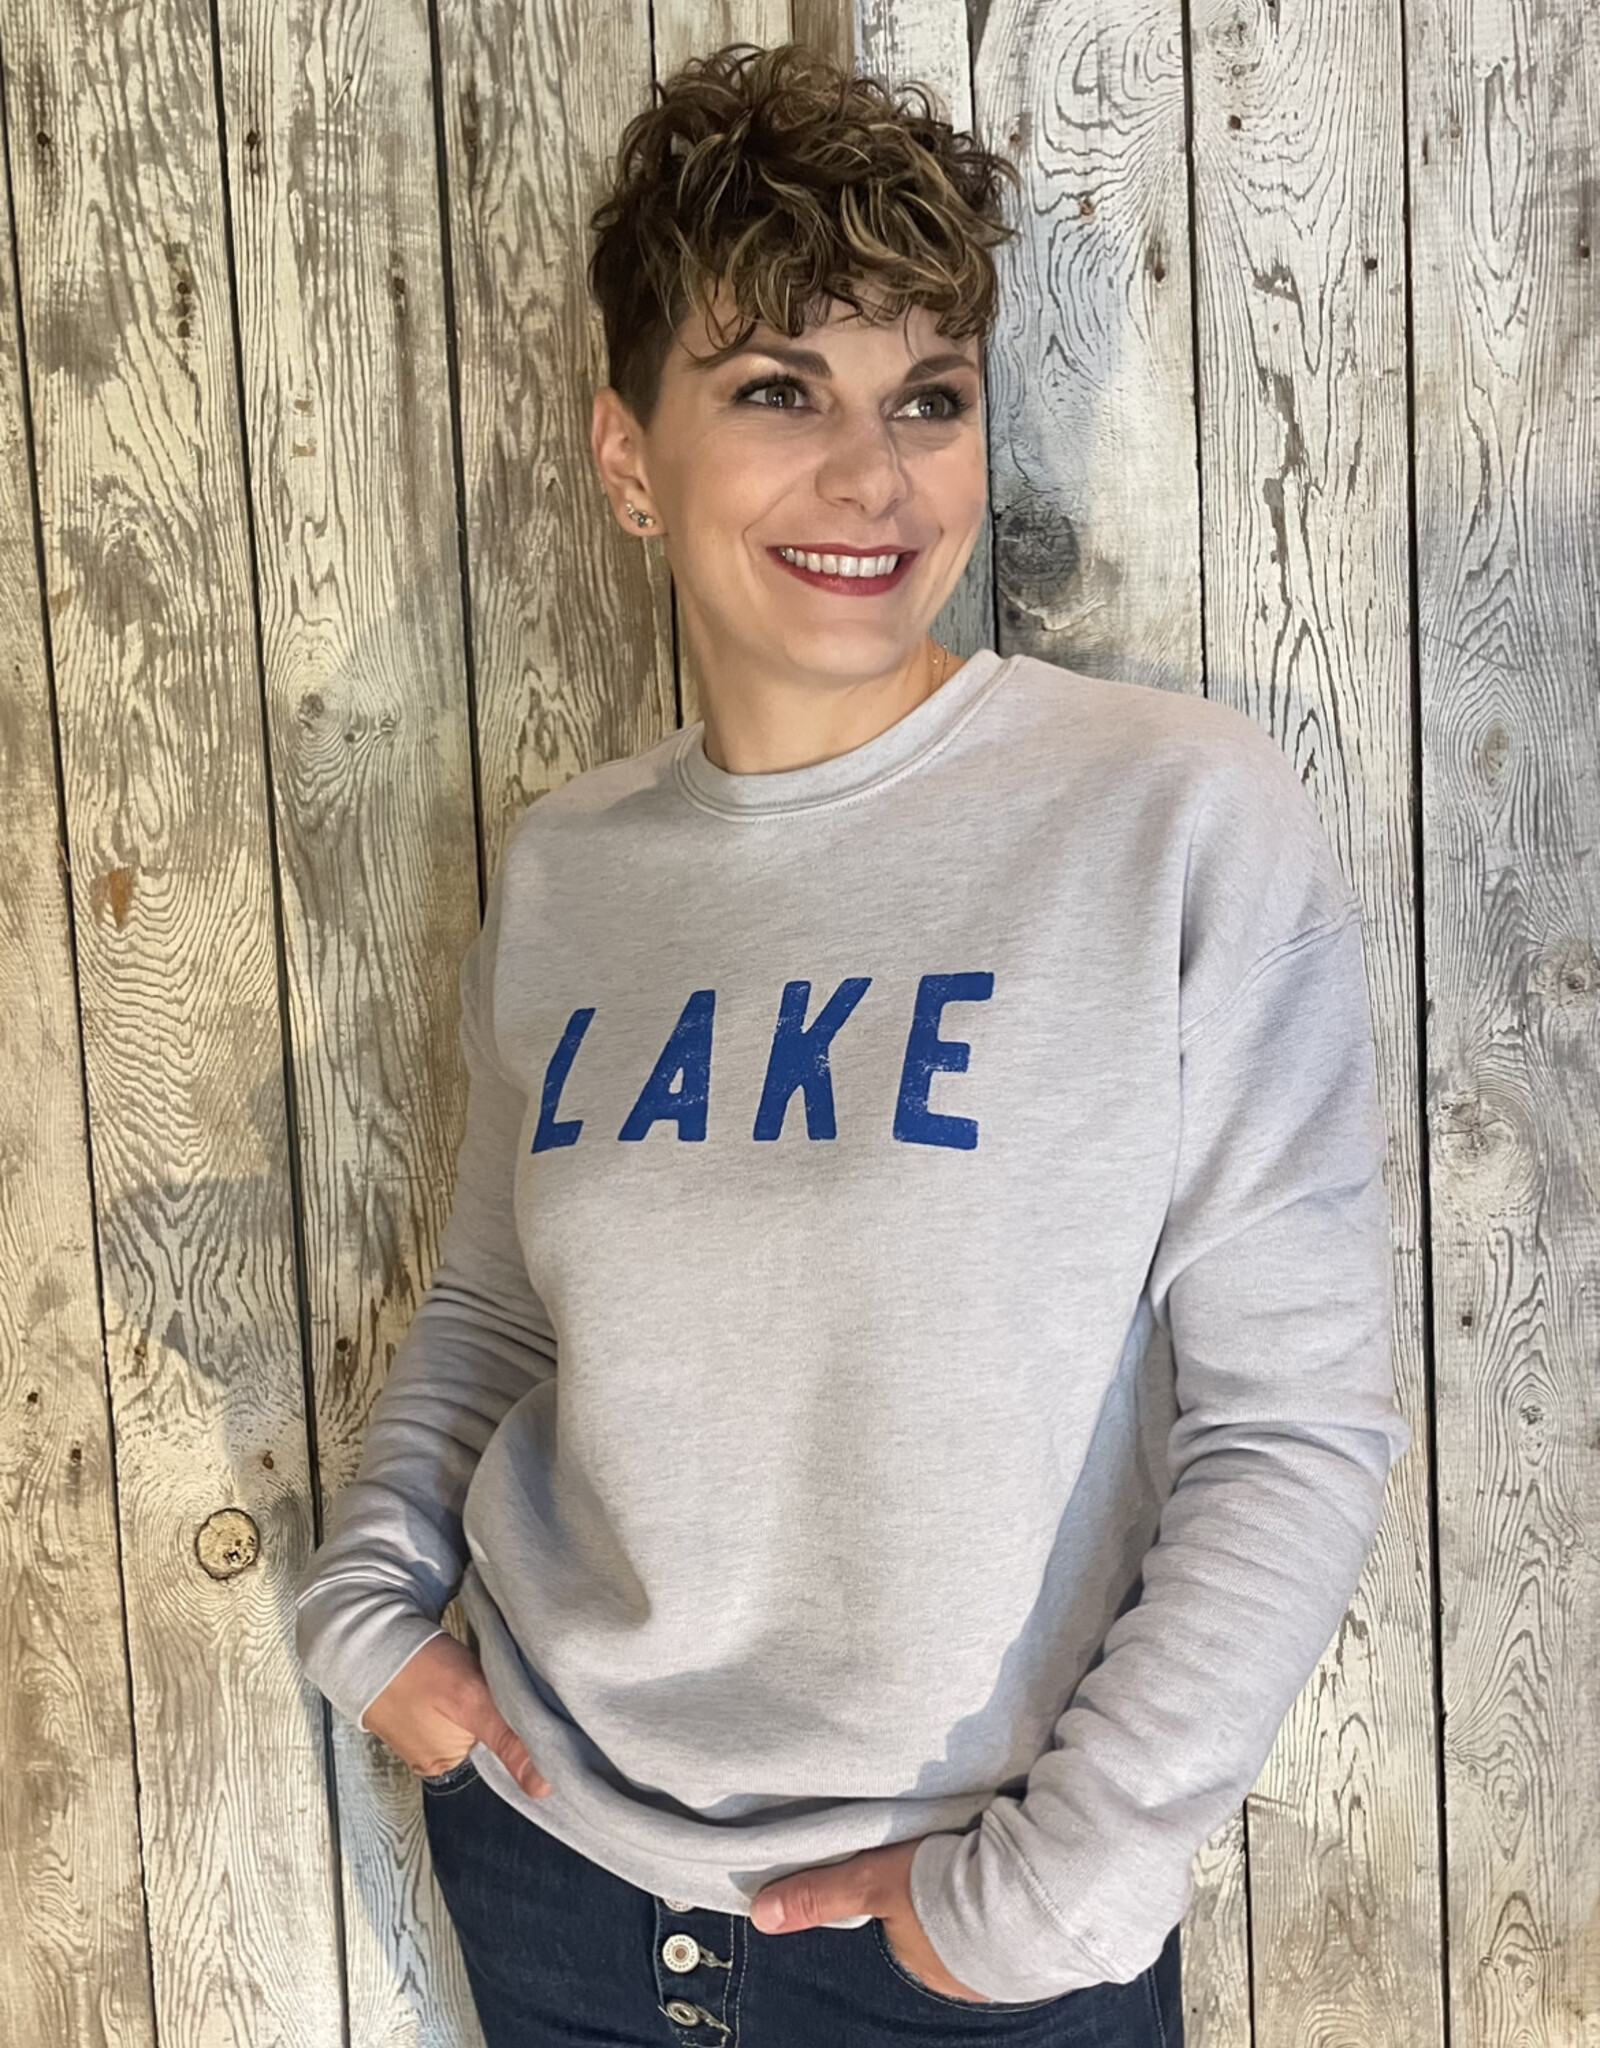 Oat Collective Lake Graphic Crew Sweatshirt - Light Blue